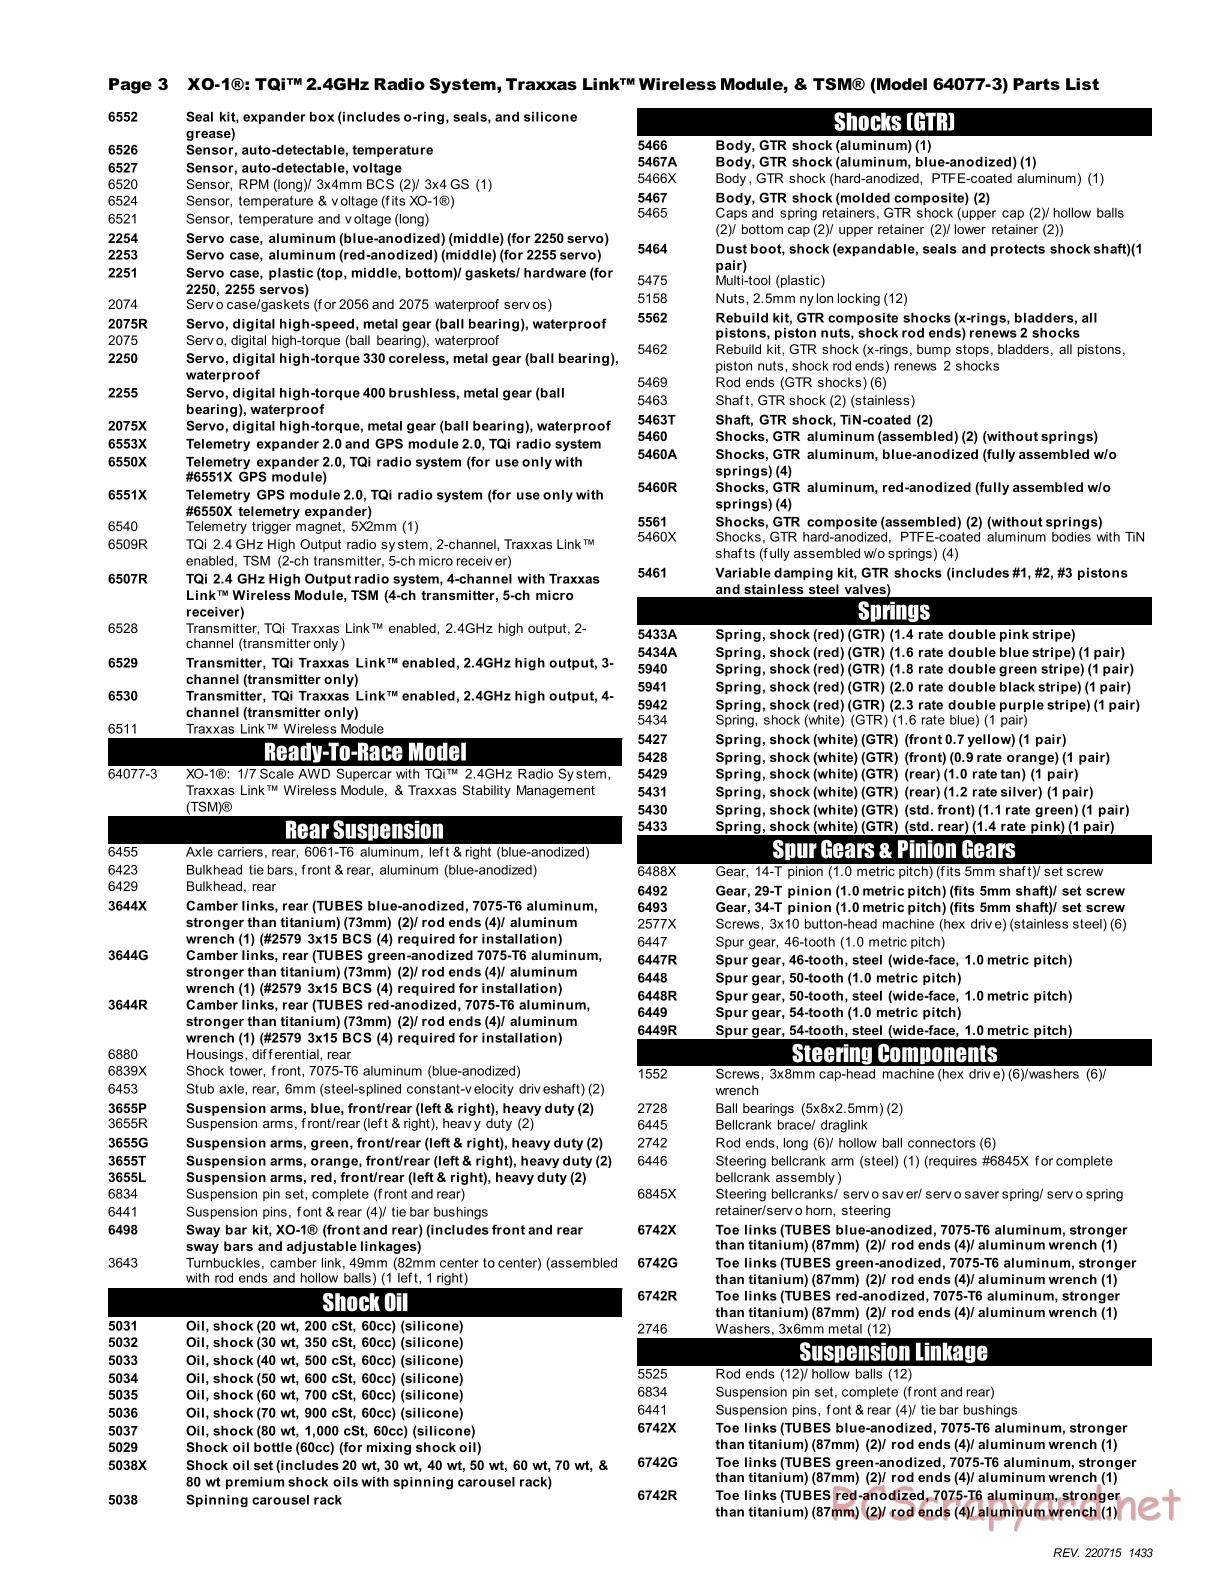 Traxxas - XO-1 TSM - Parts List - Page 3